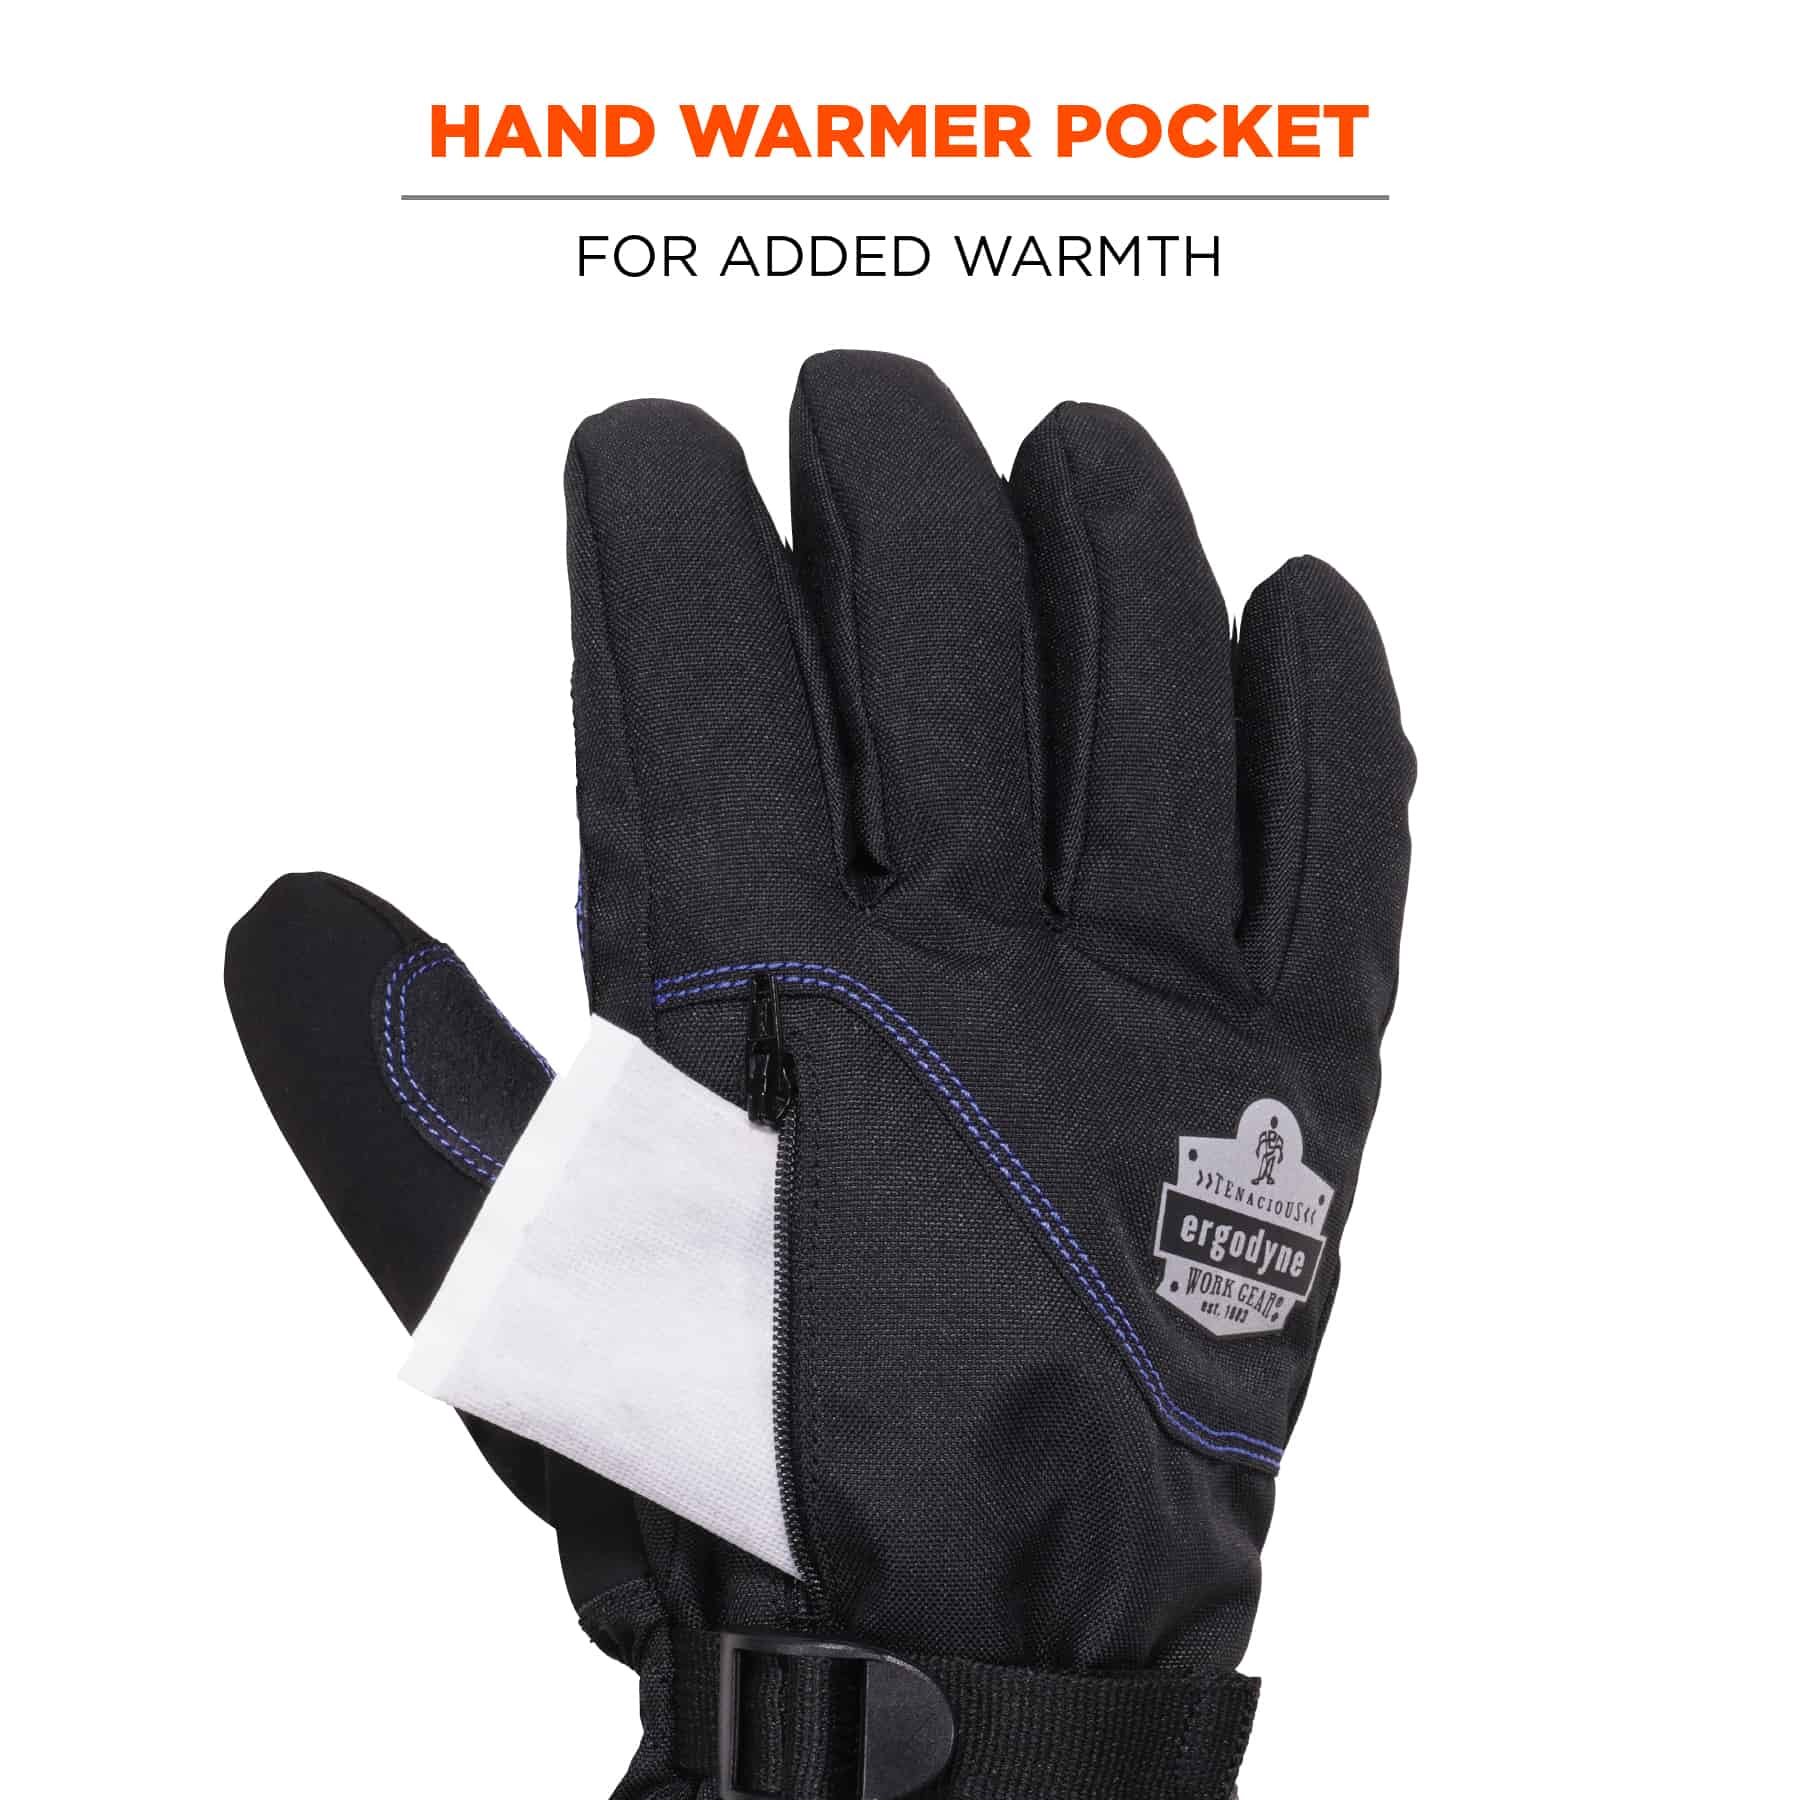 2 Pairs Waterproof Thermal Winter Work Gloves Polar Fleece Liner Superior Grip Double Latex Coating for Maintenance Garden Logistics Warehousing in Cold Weather Outdoor Activities